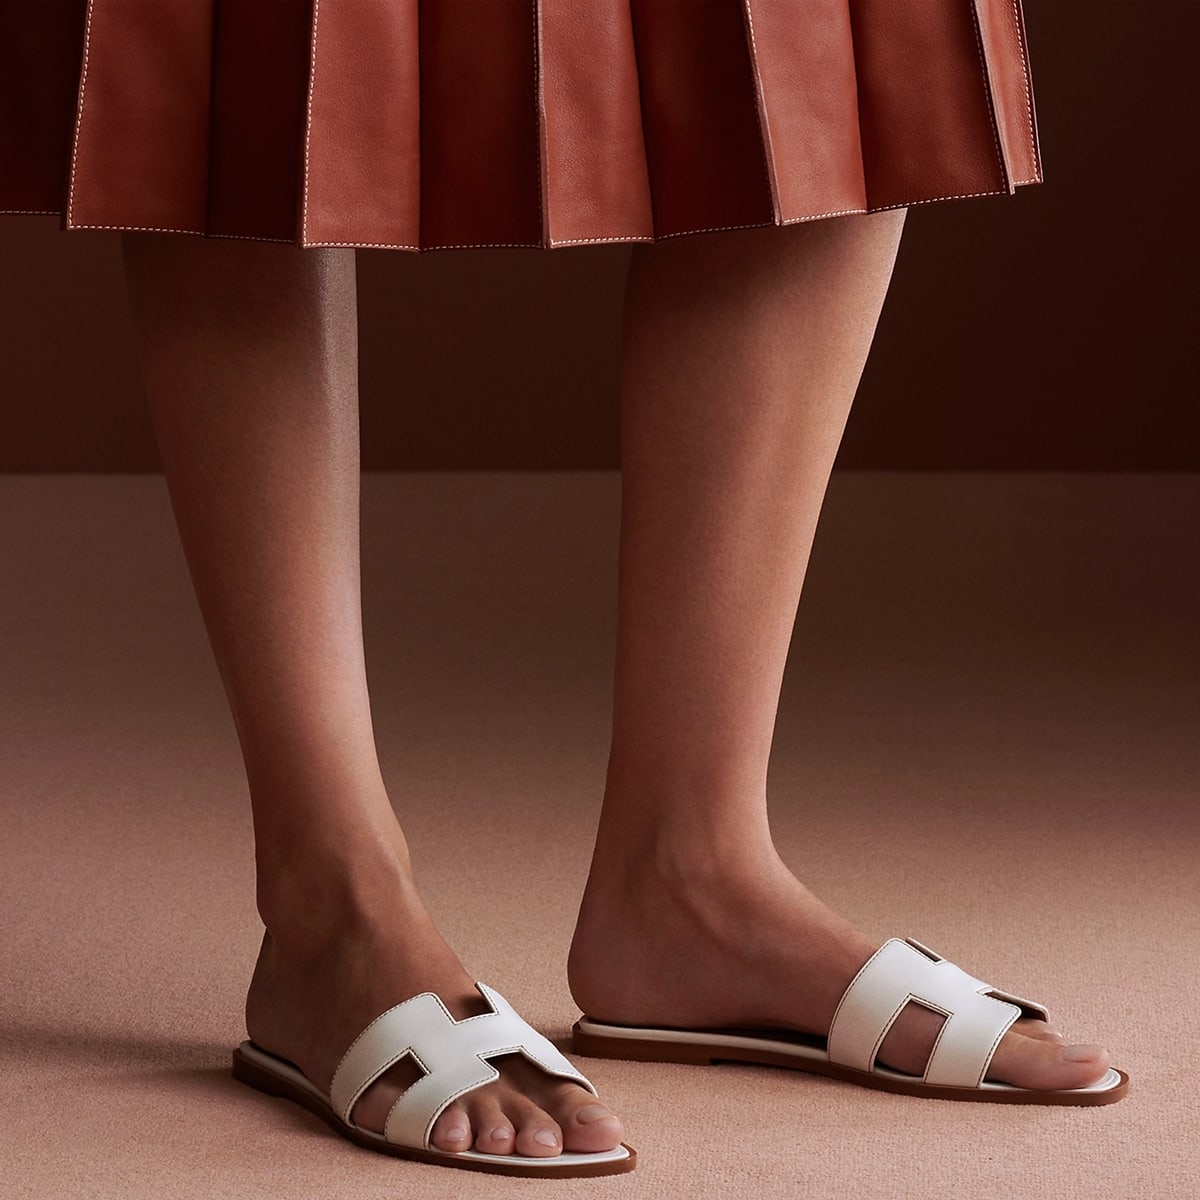 The classic Hermès Oran sandals were created by luxury shoe designer Pierre Hardy in 1997